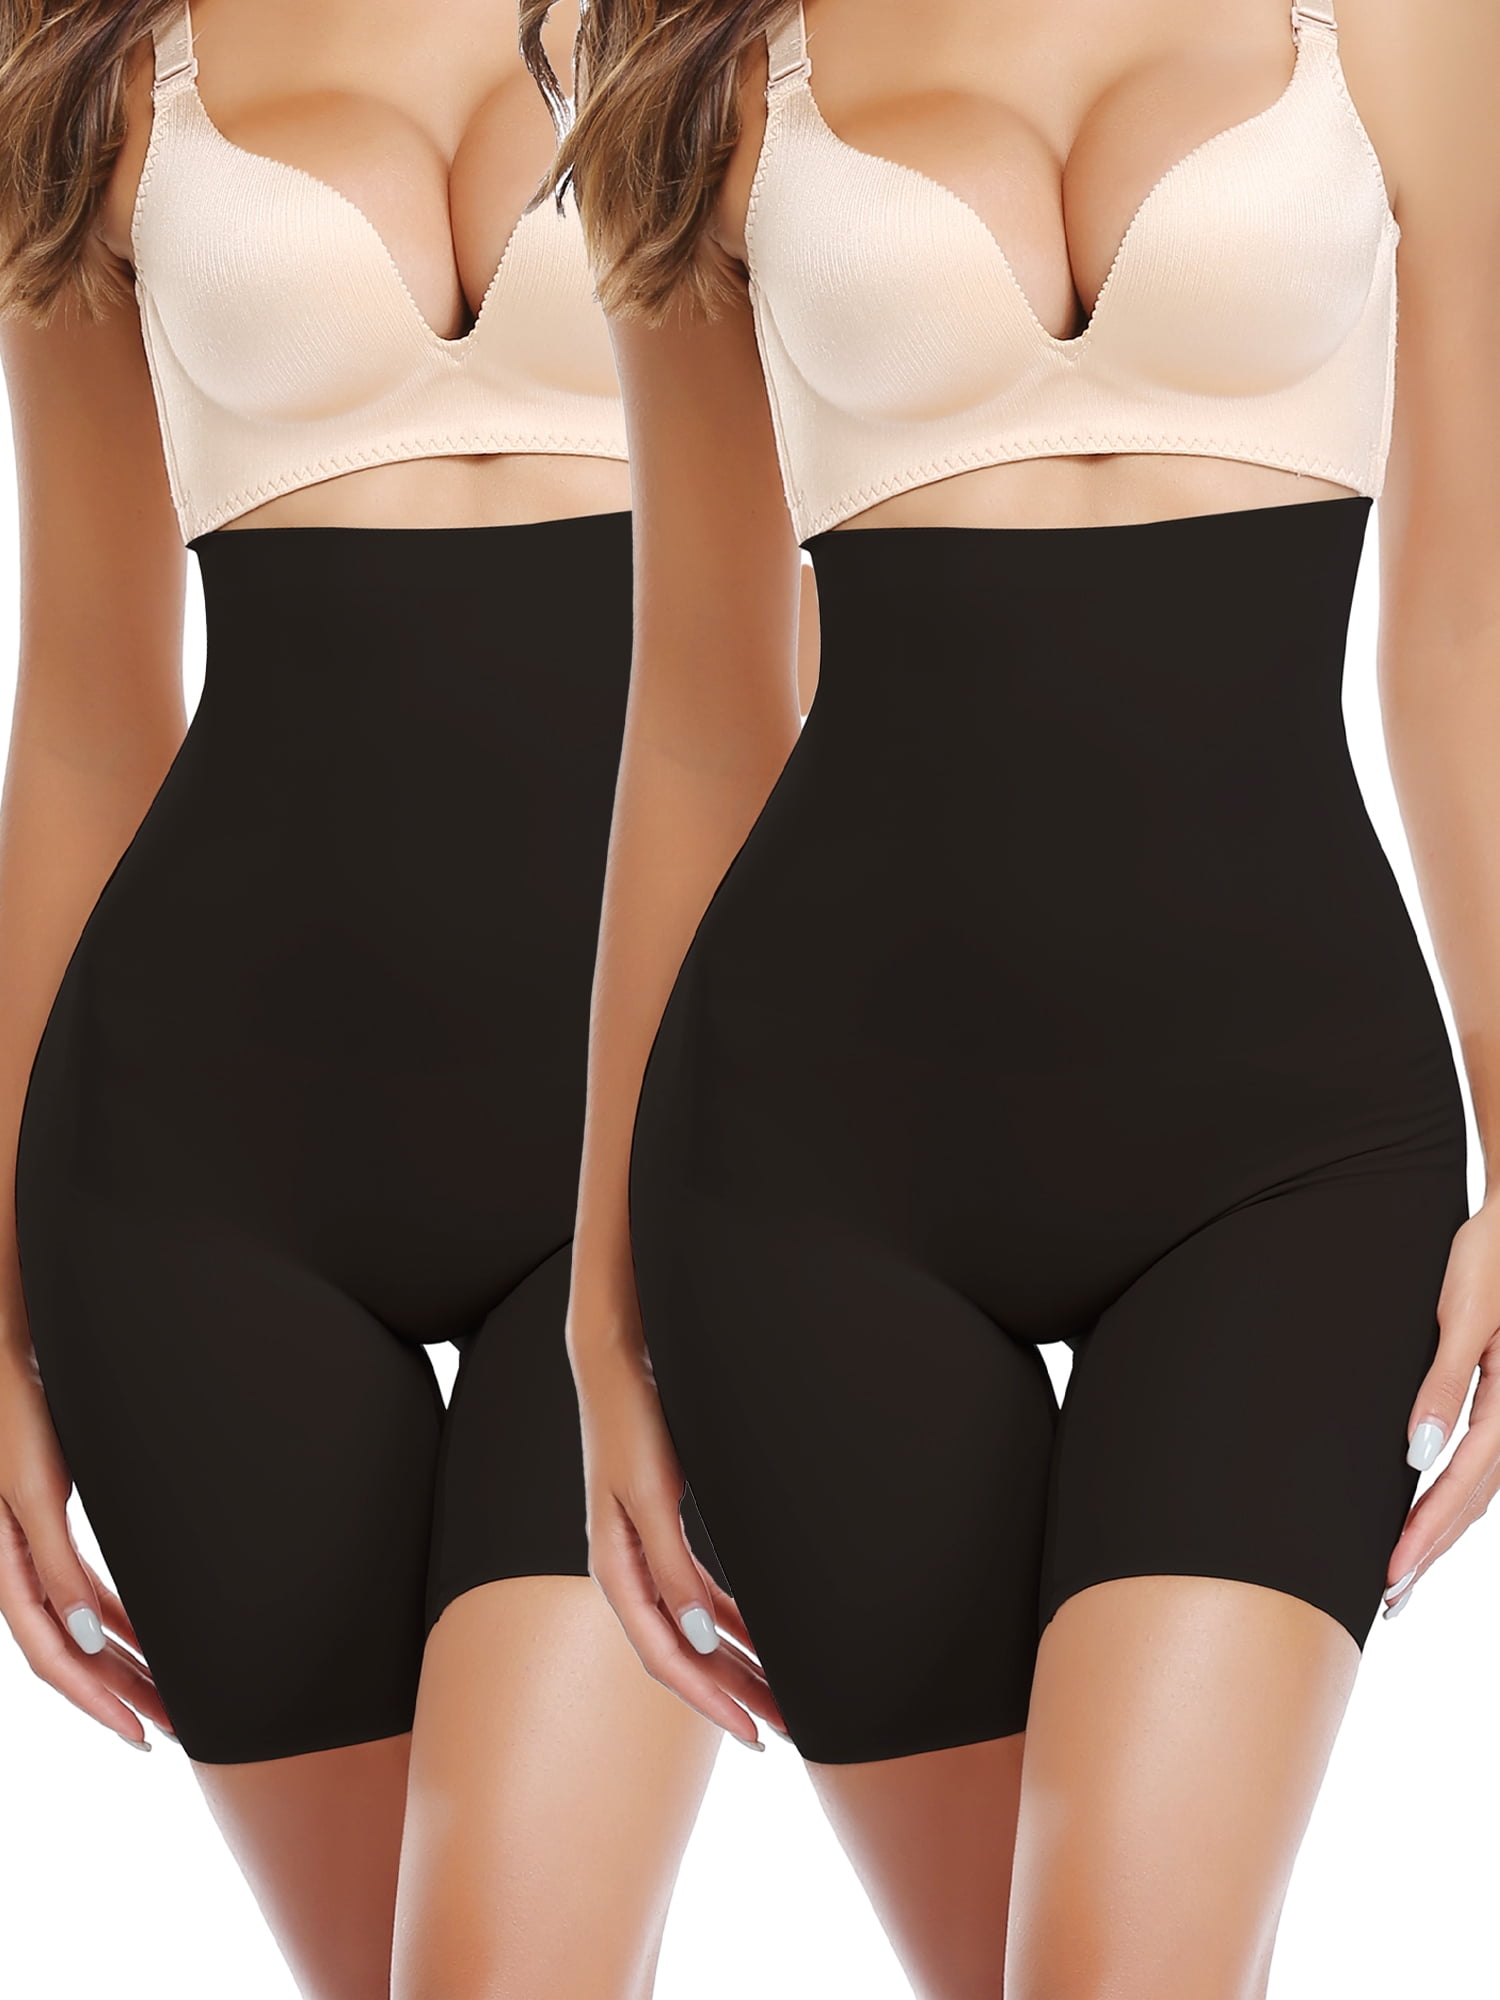 QRIC High Waist Shapewear Shorts for Women Thigh Slimmer Body Shaper  Anti-chafing Under Dress Slip Shorts Single Pack Black 